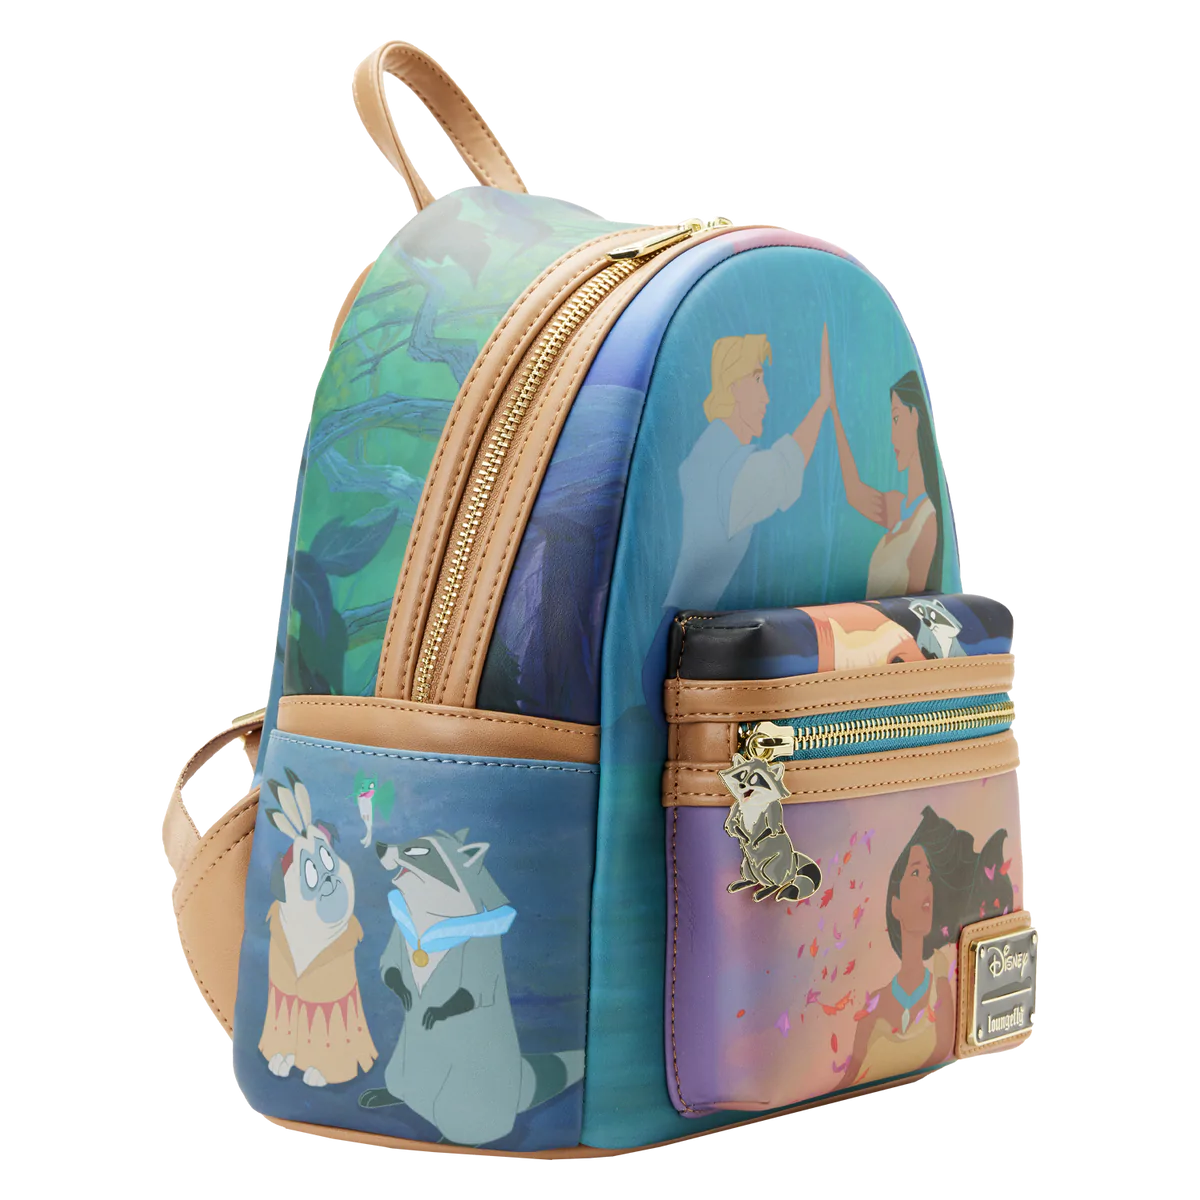 Loungefly Disney Beauty And The Beast Scene Mini Backpack